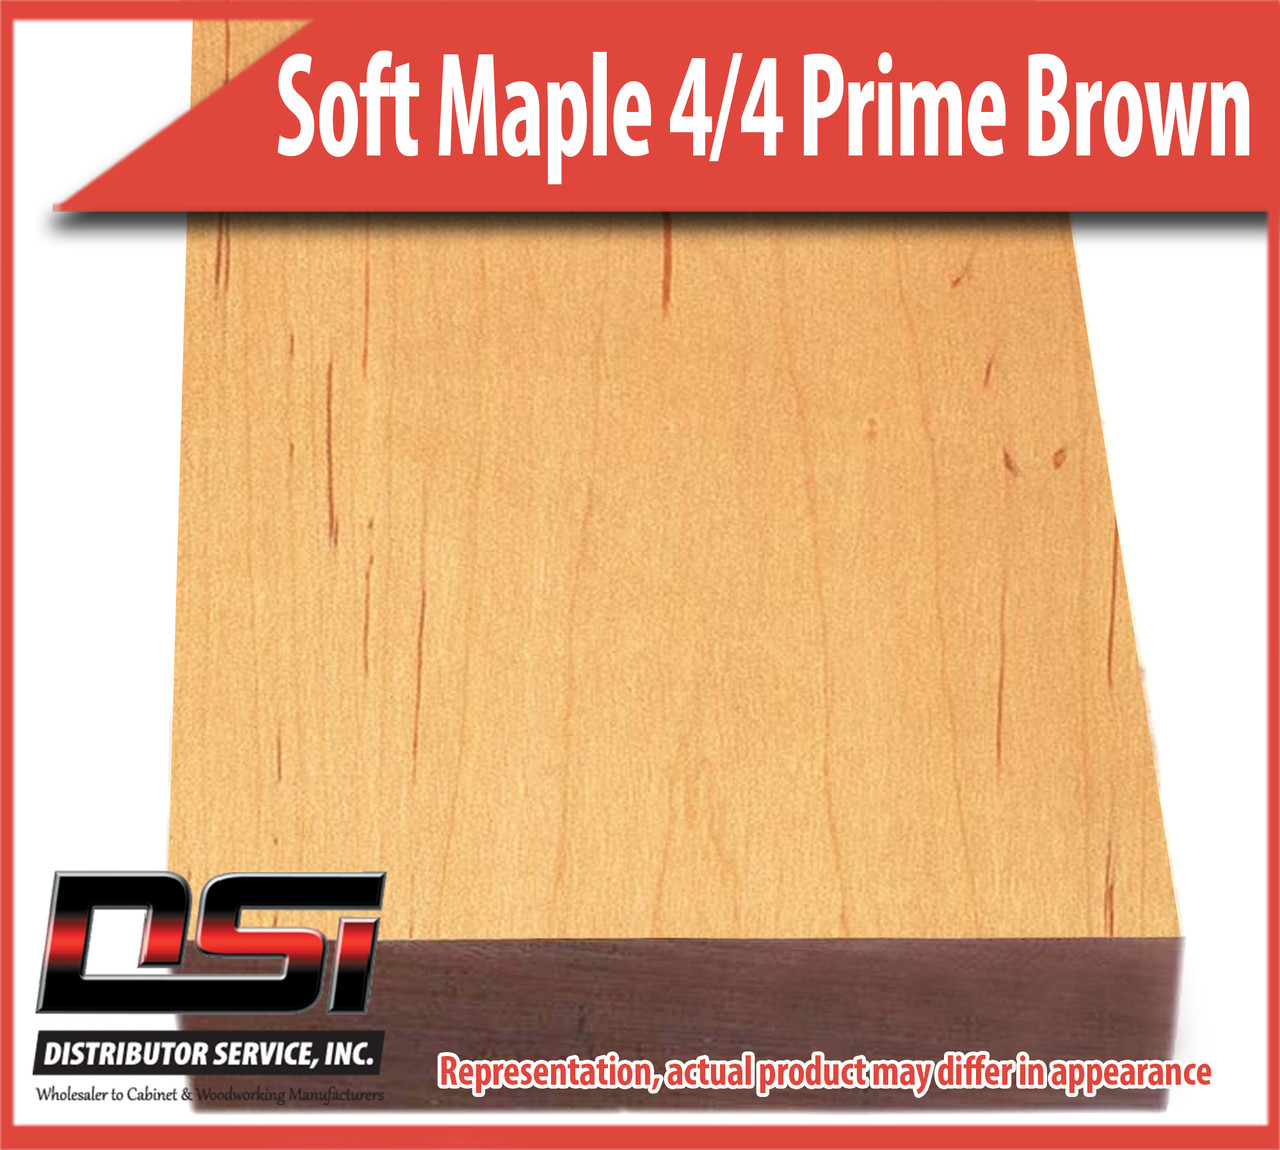 Domestic Hardwood Lumber Soft Maple 4/4 Prime Brown 15/16" 8'